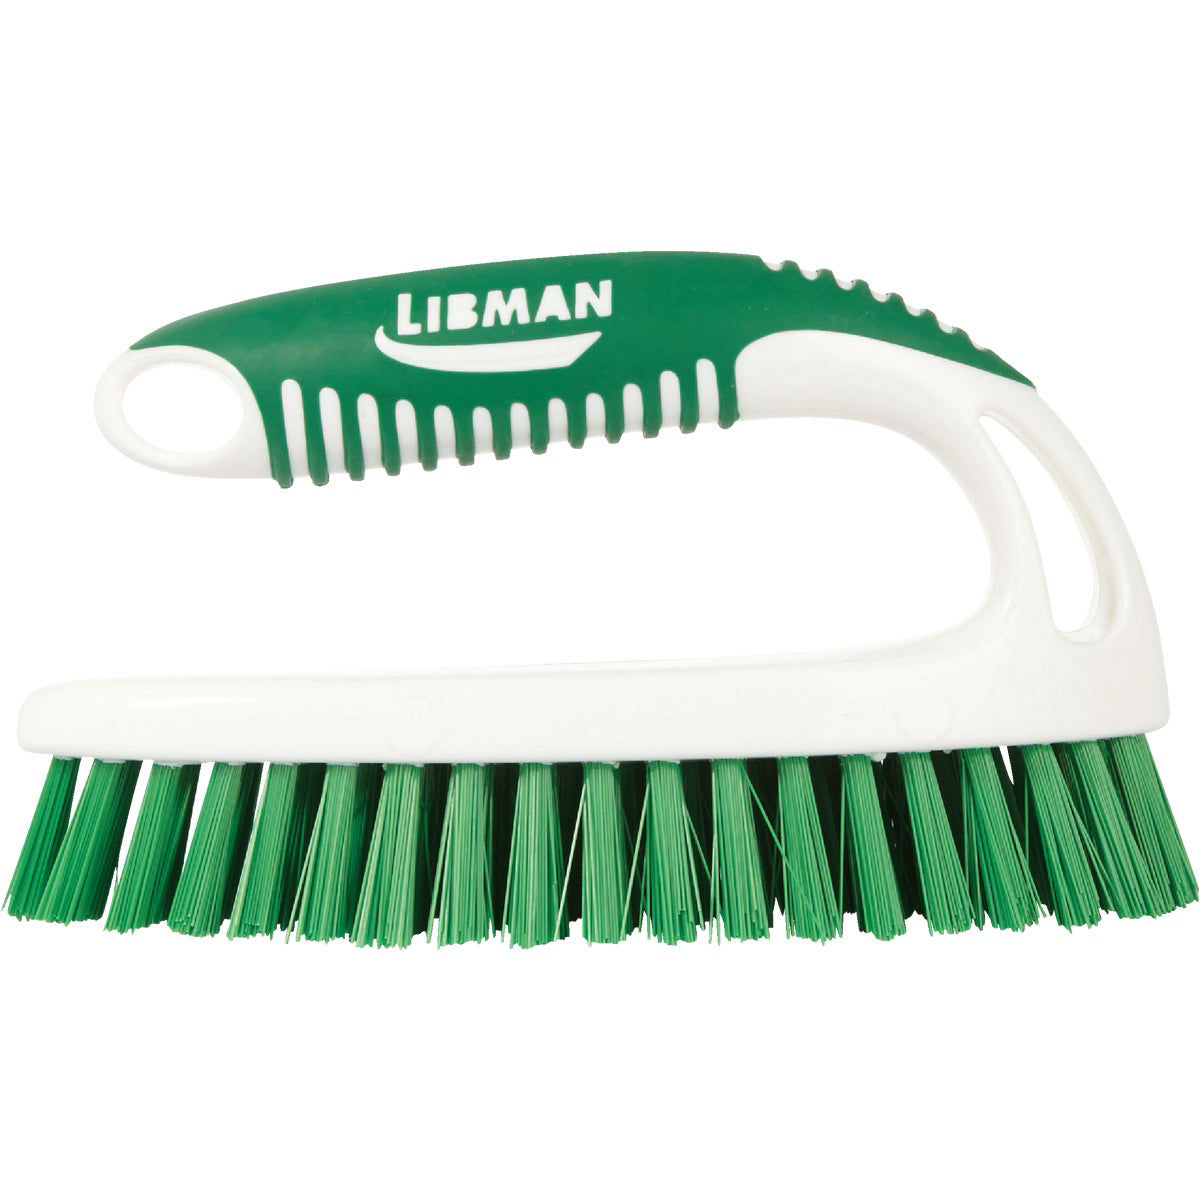 Libman Green Bristle Big Scrub Brush